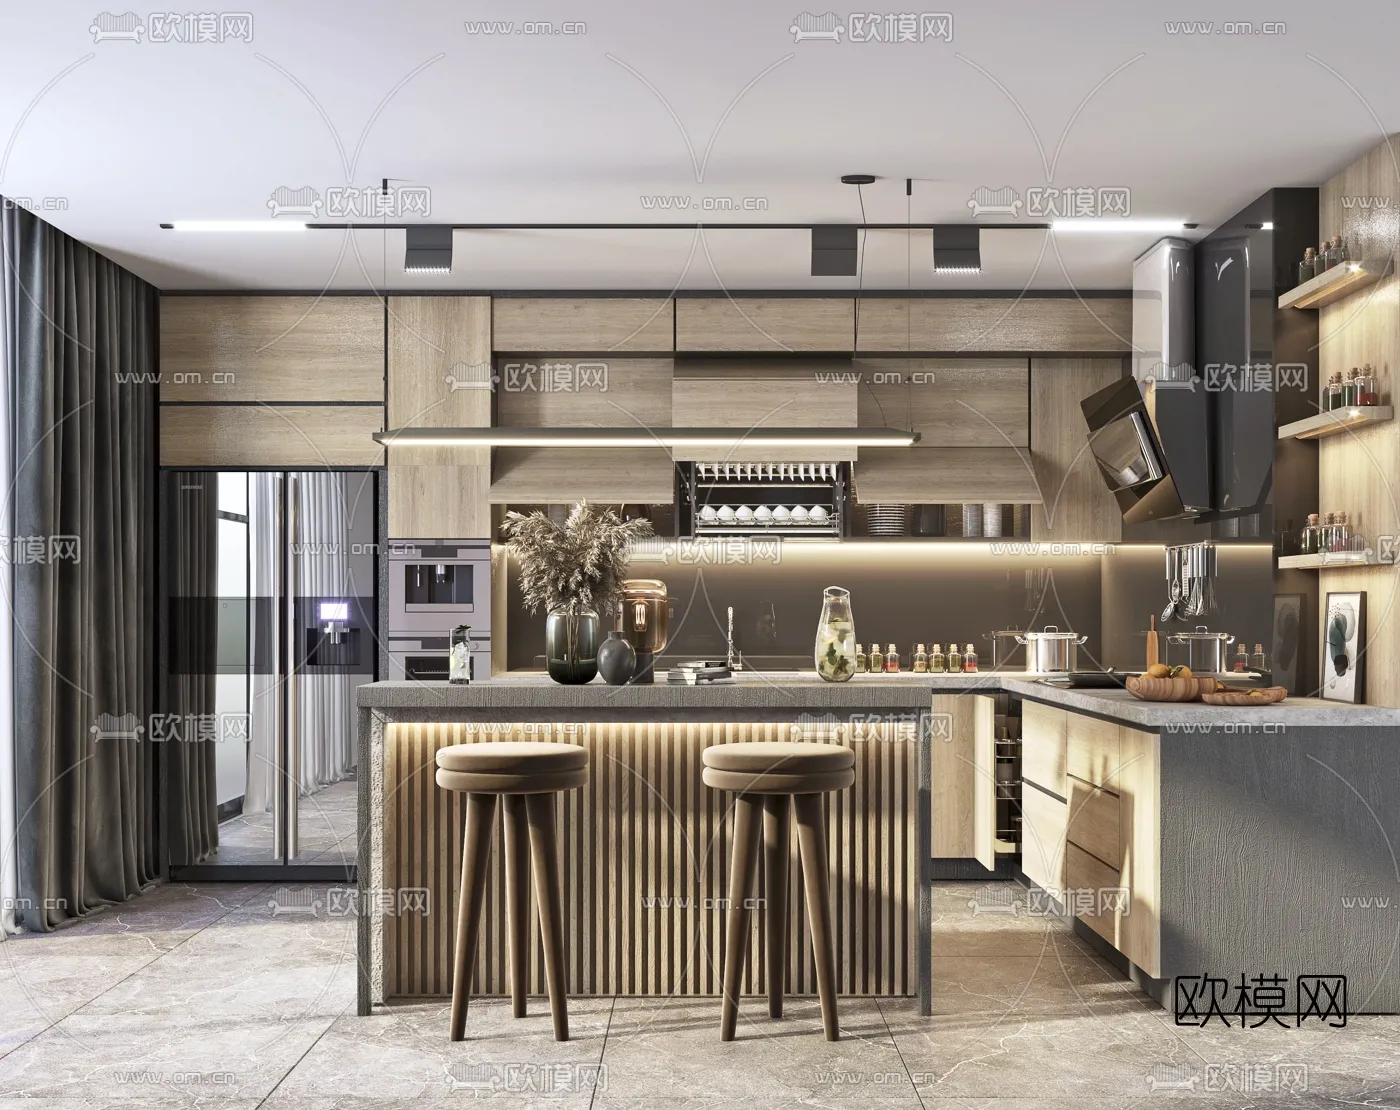 Kitchen 3D Scenes – 1040